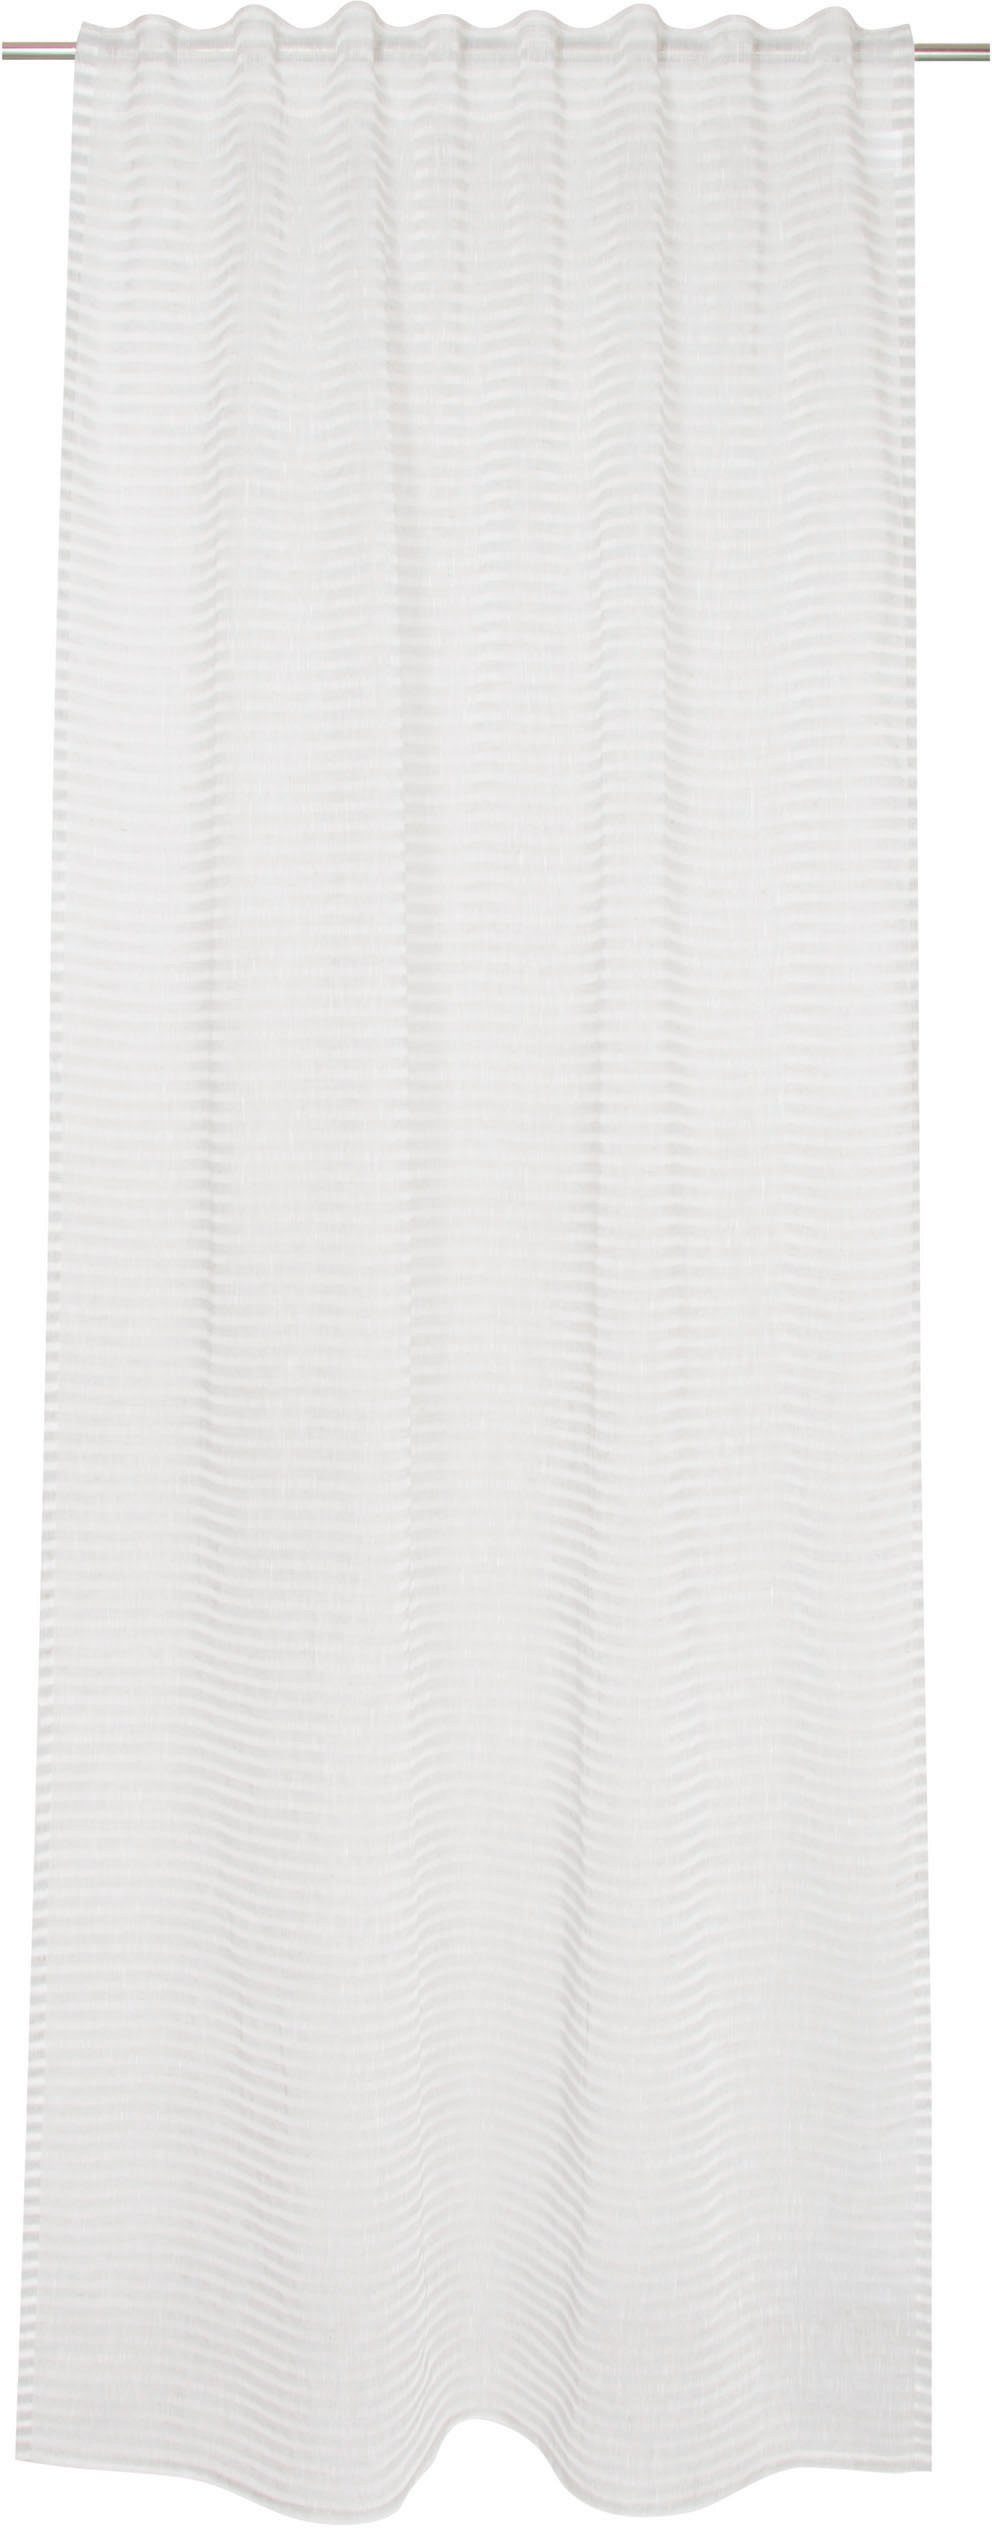 Vorhang Natural Stripe, TOM TAILOR HOME, verdeckte Schlaufen (1 St), transparent, transparent grau